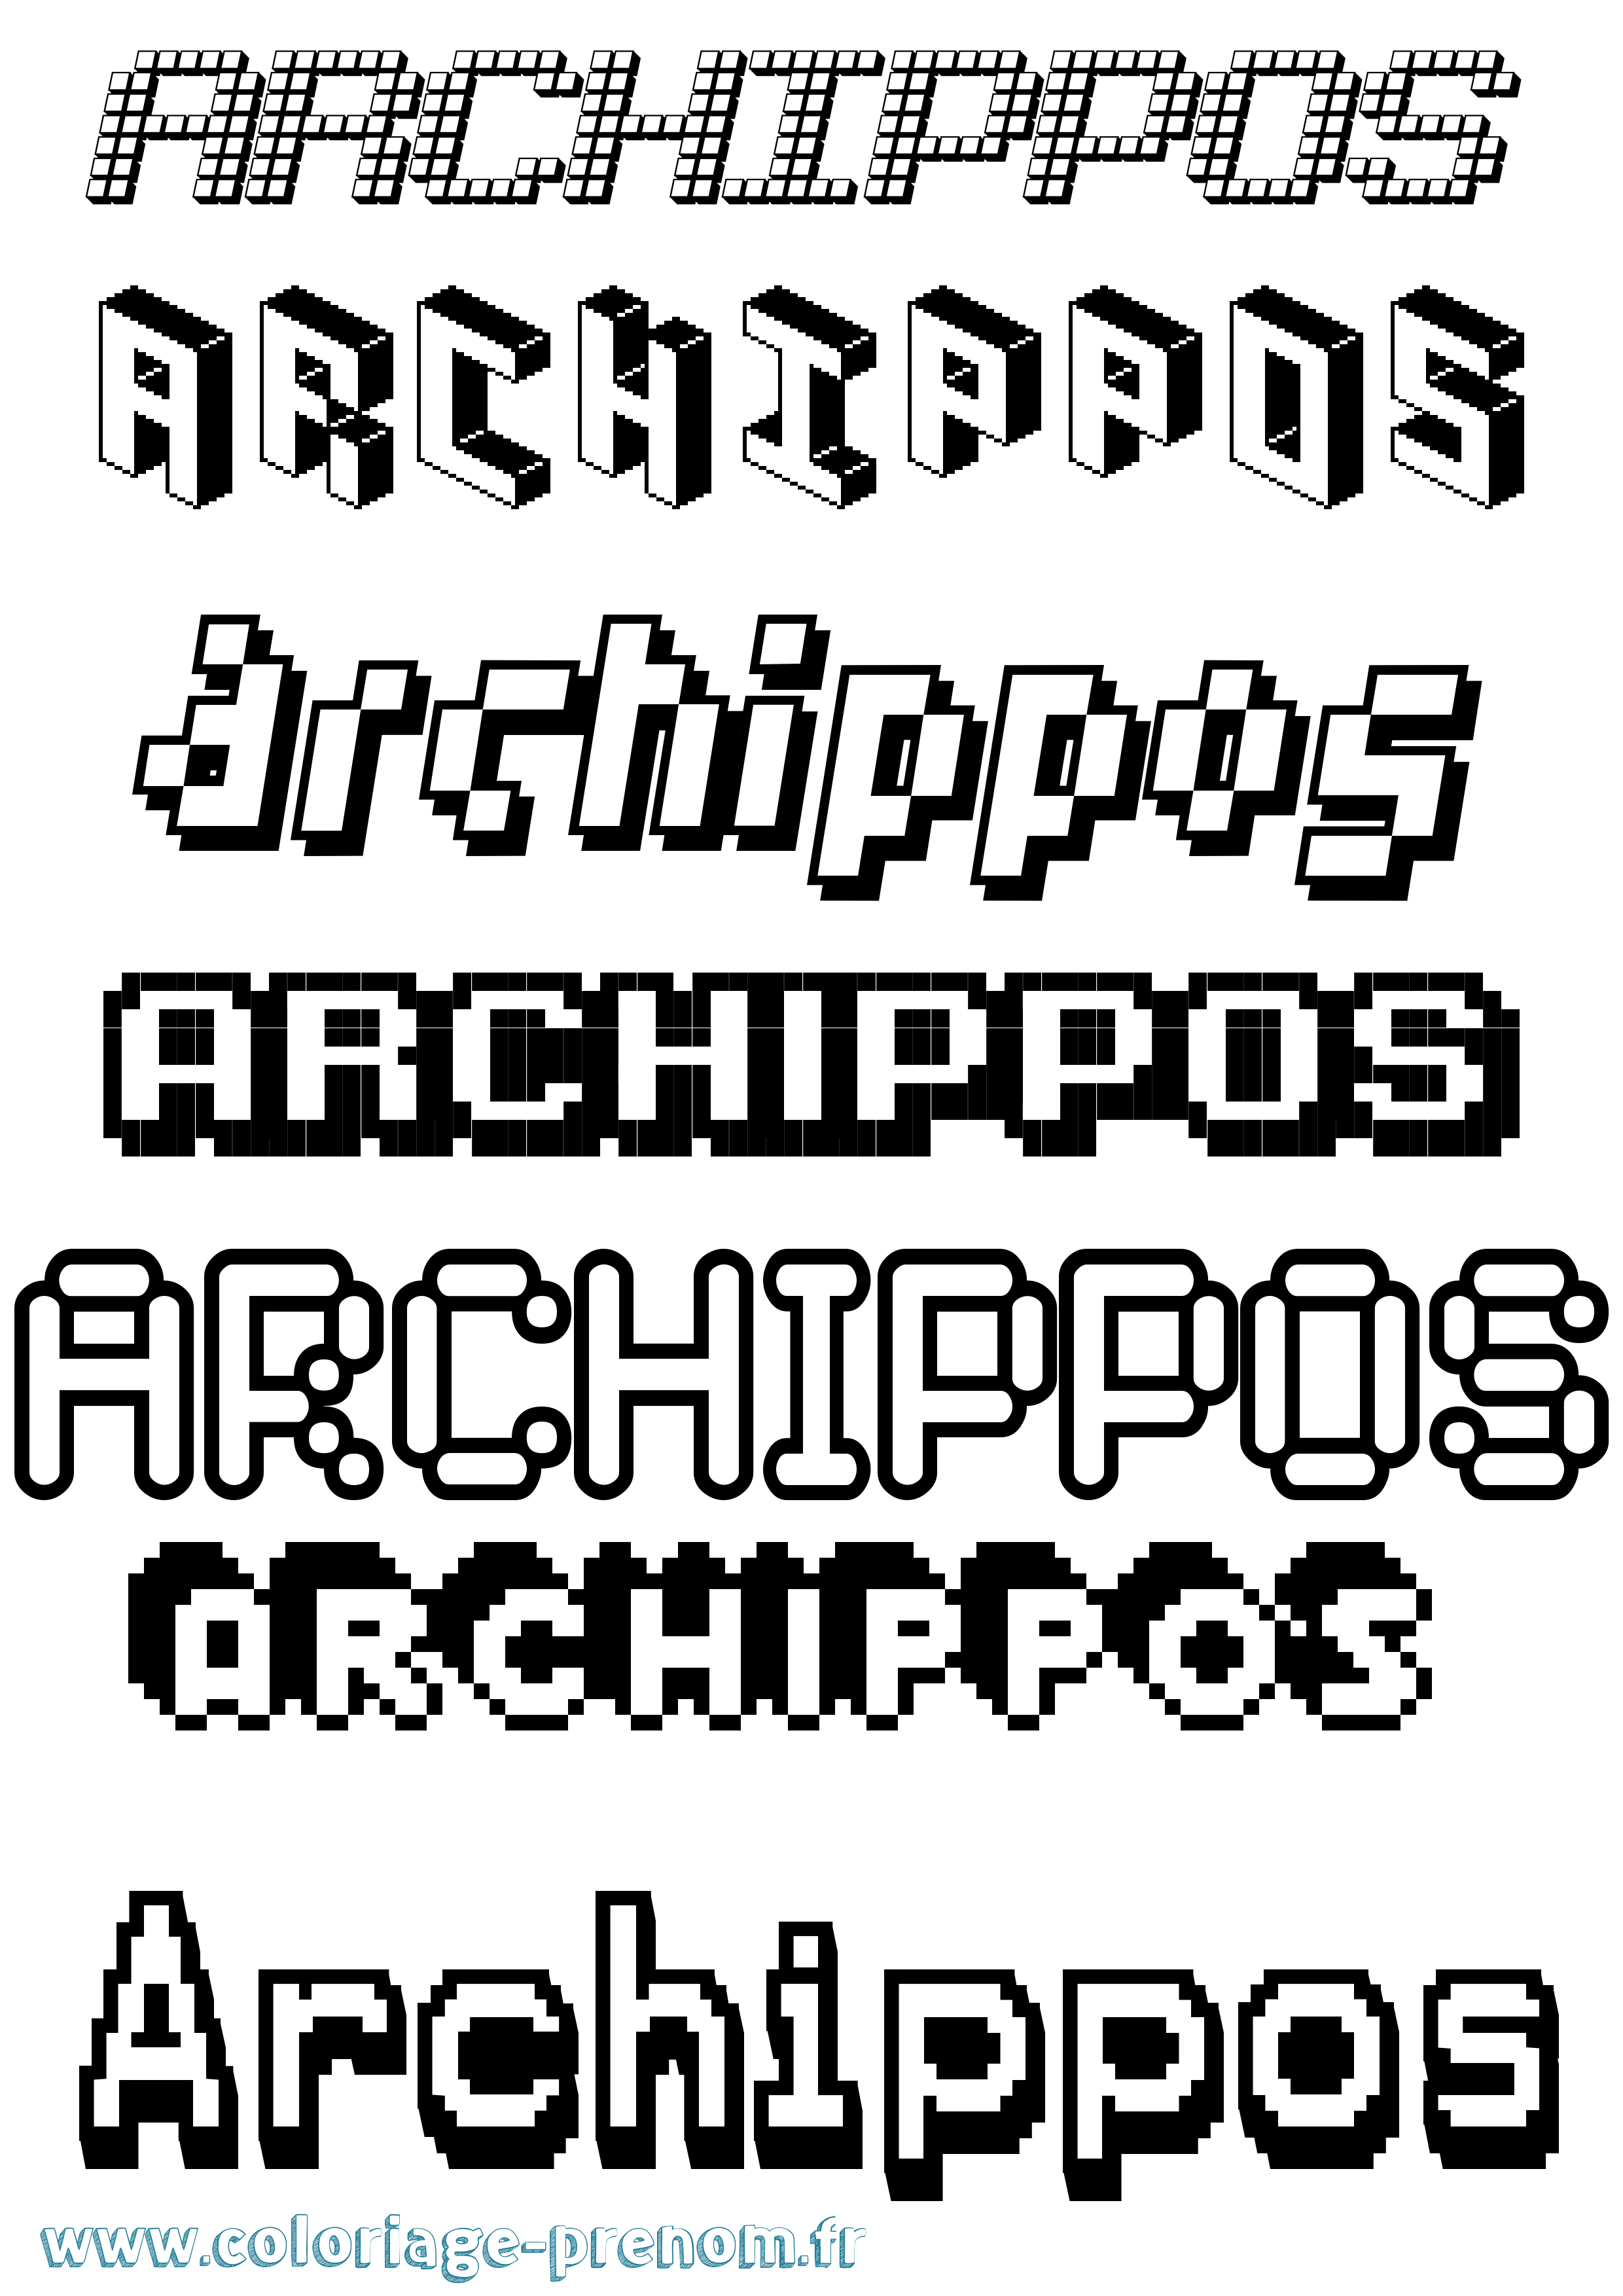 Coloriage prénom Archippos Pixel